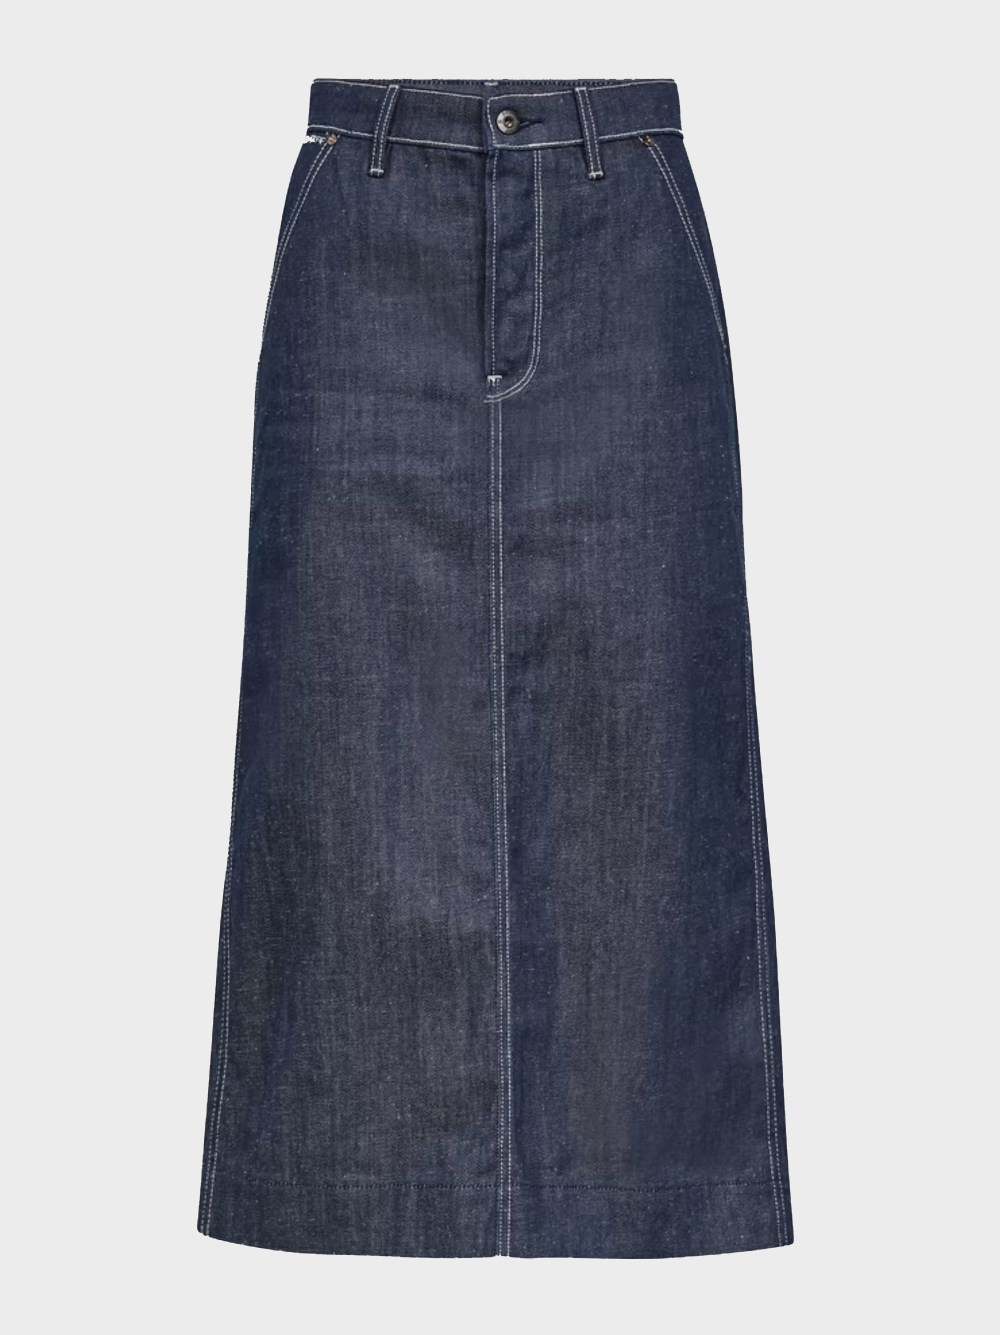 Elsa Hosk Wears The Perfect Denim Skirt: Here's 10 To Shop